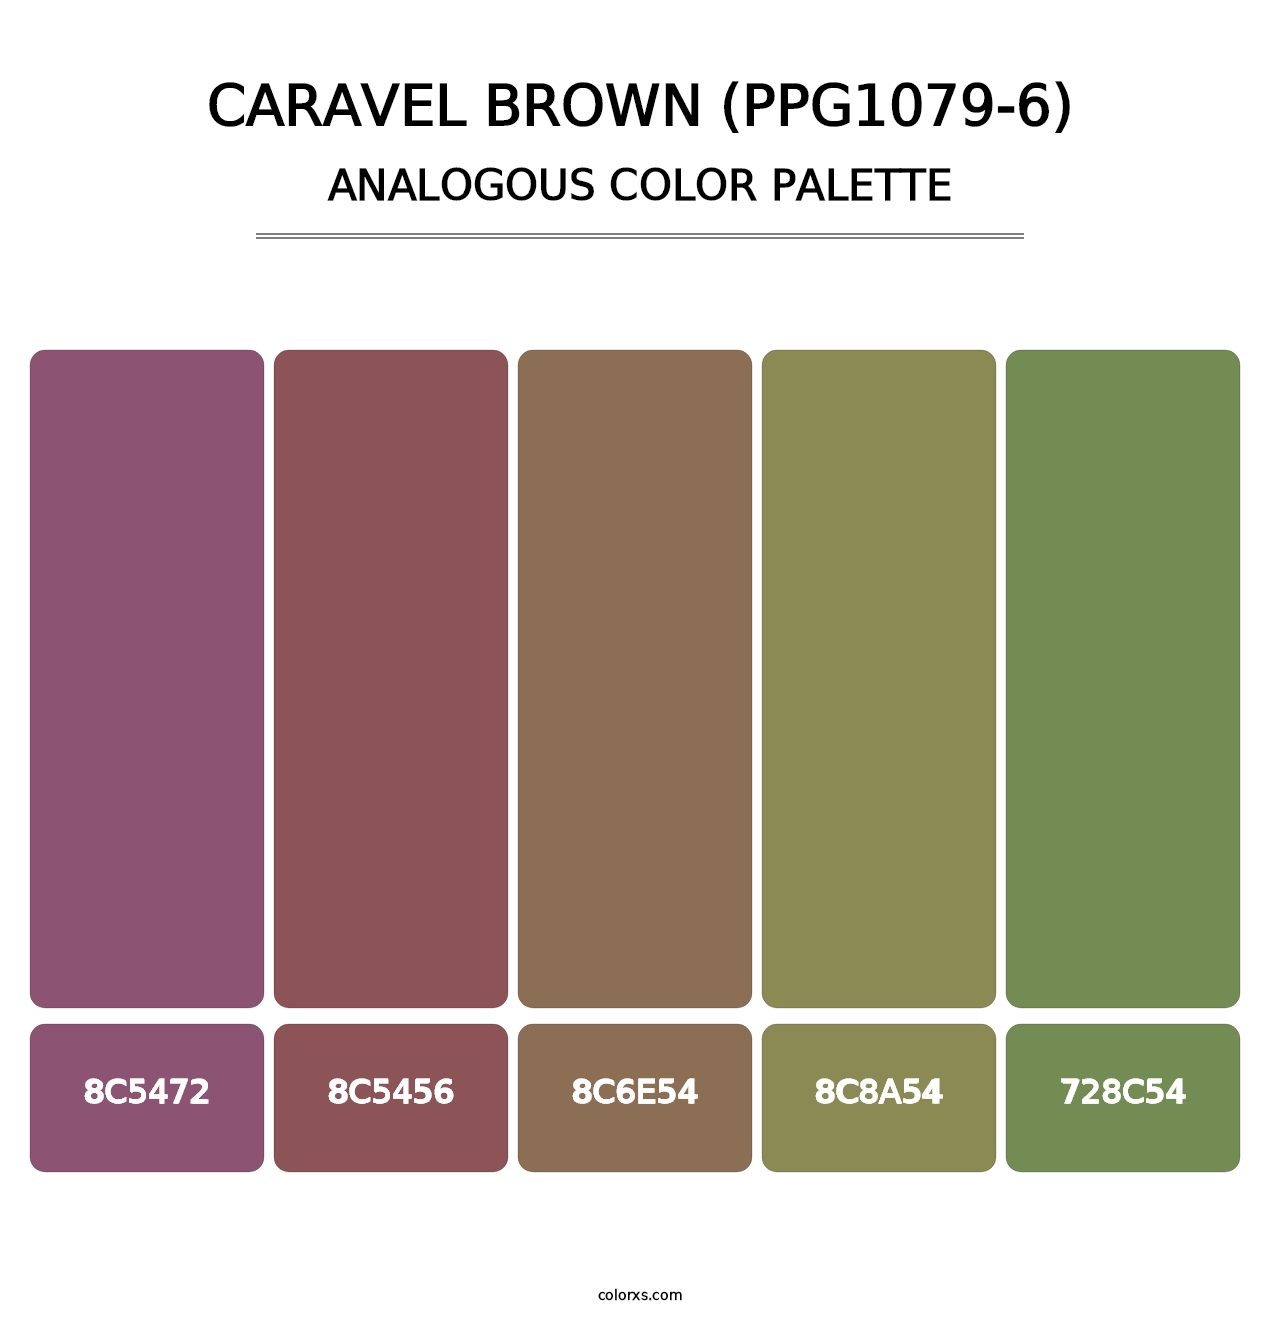 Caravel Brown (PPG1079-6) - Analogous Color Palette